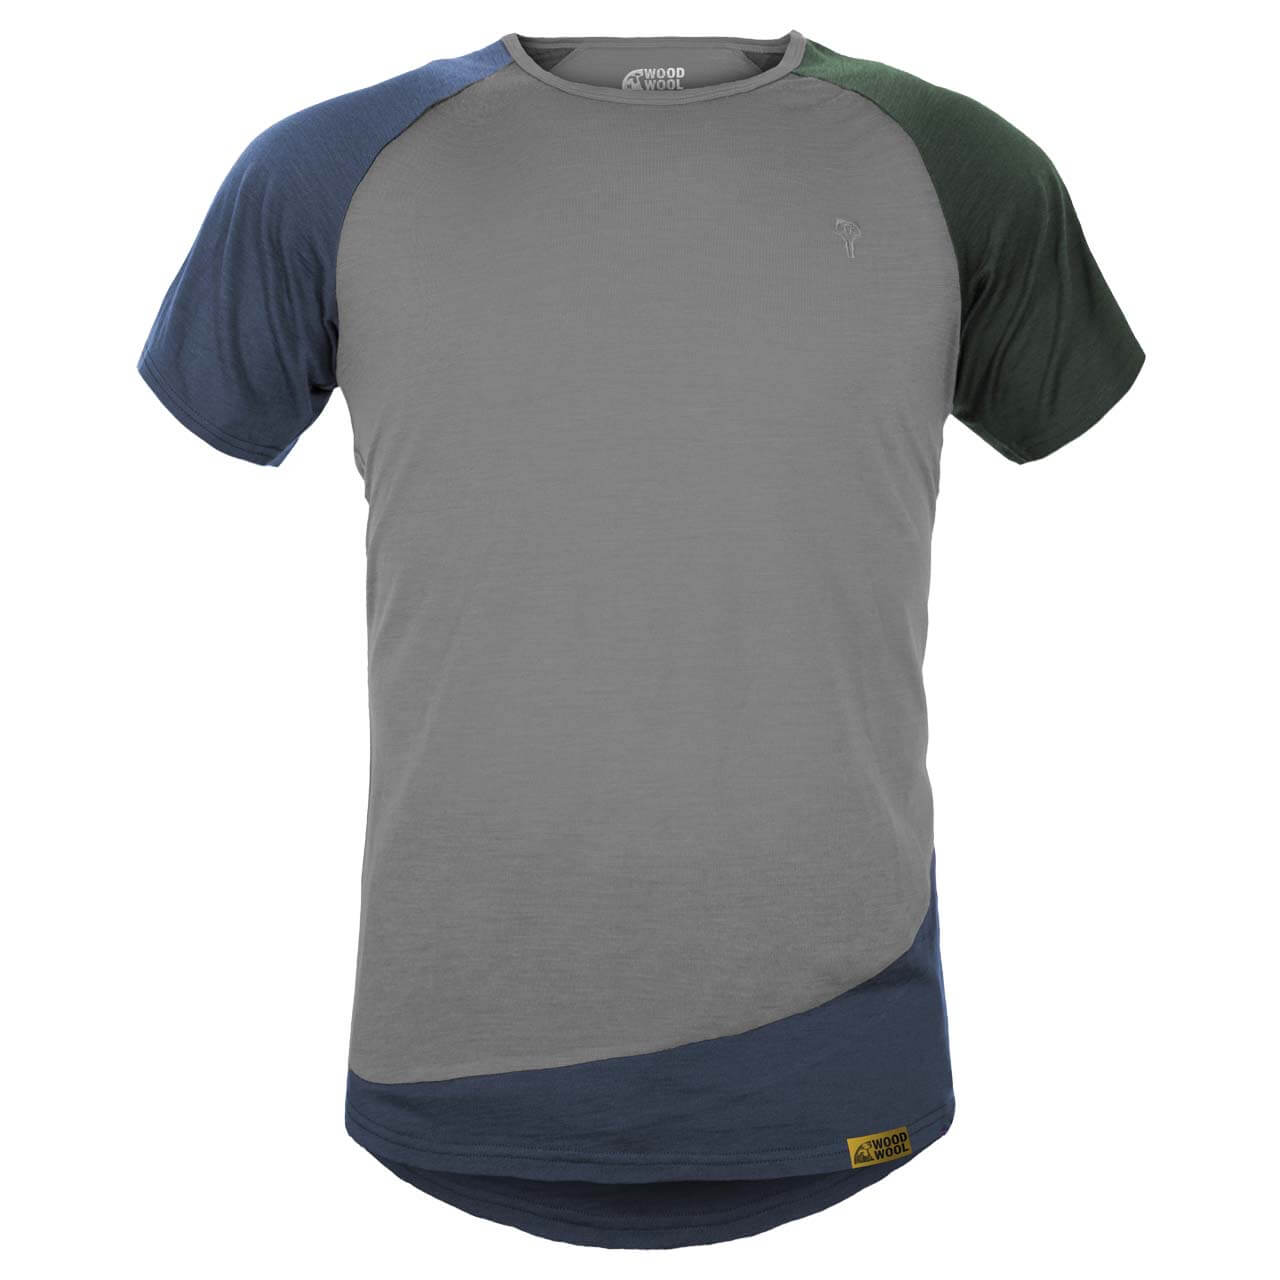 Grüezi Bag WoodWool T-Shirt Mr. Kirk - Slate Grey, XL von Grüezi Bag}